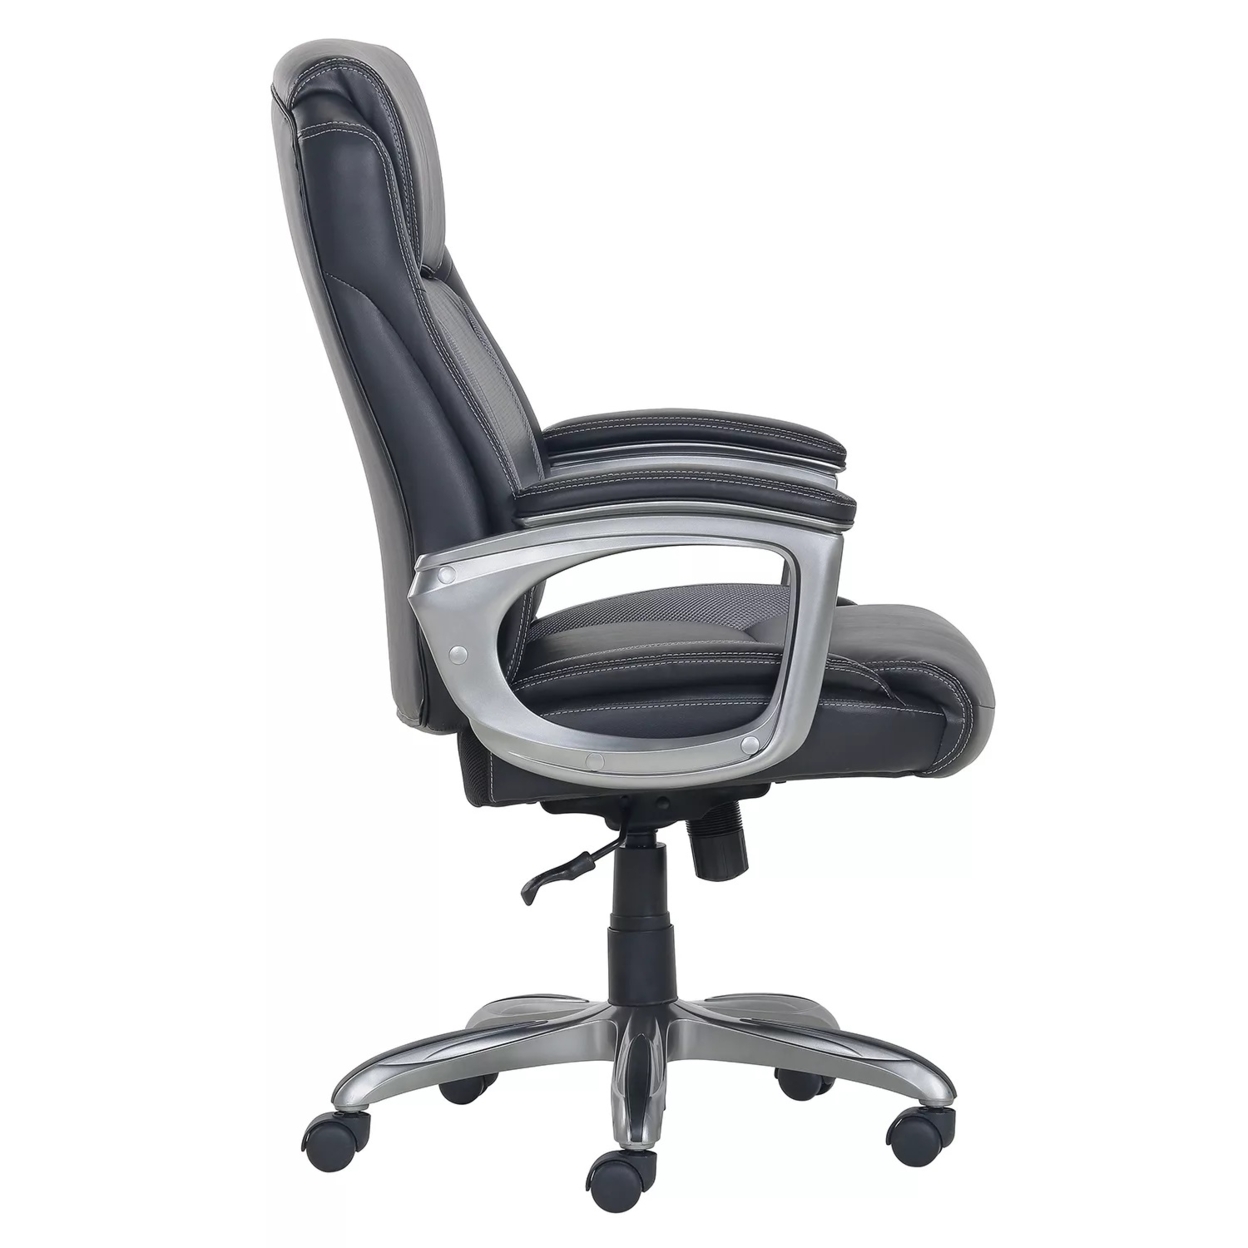 Serta Managerâs Office Chair, Black/Gray